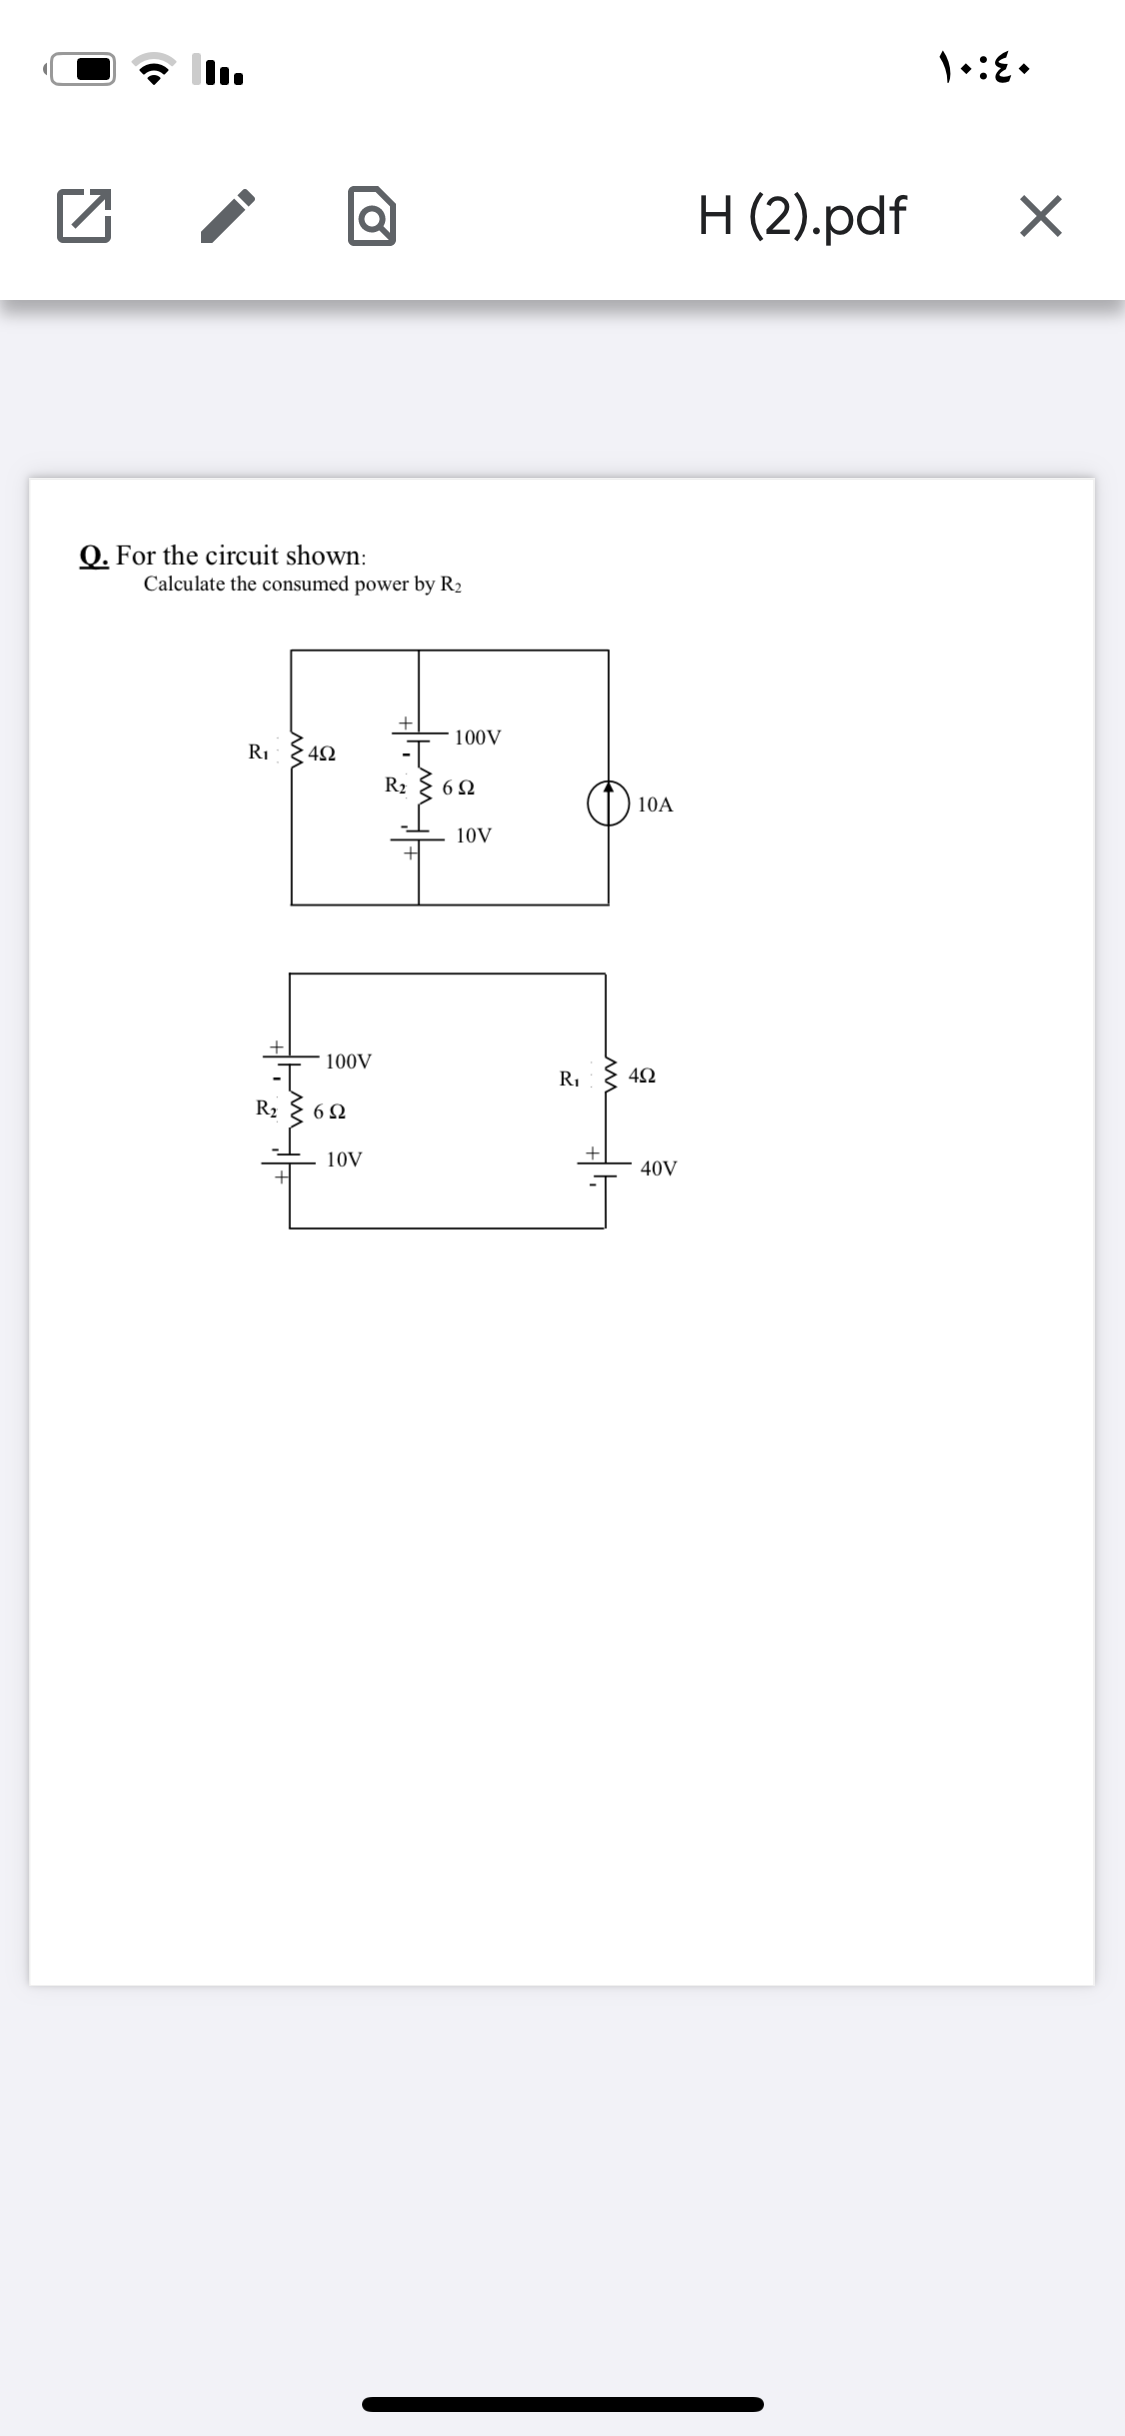 H (2).pdf
Q. For the circuit shown:
Calculate the consumed power by R2
100V
R, {42
R2 { 62
10A
10V
+
100V
R,
R2 { 6 N
10V
40V
